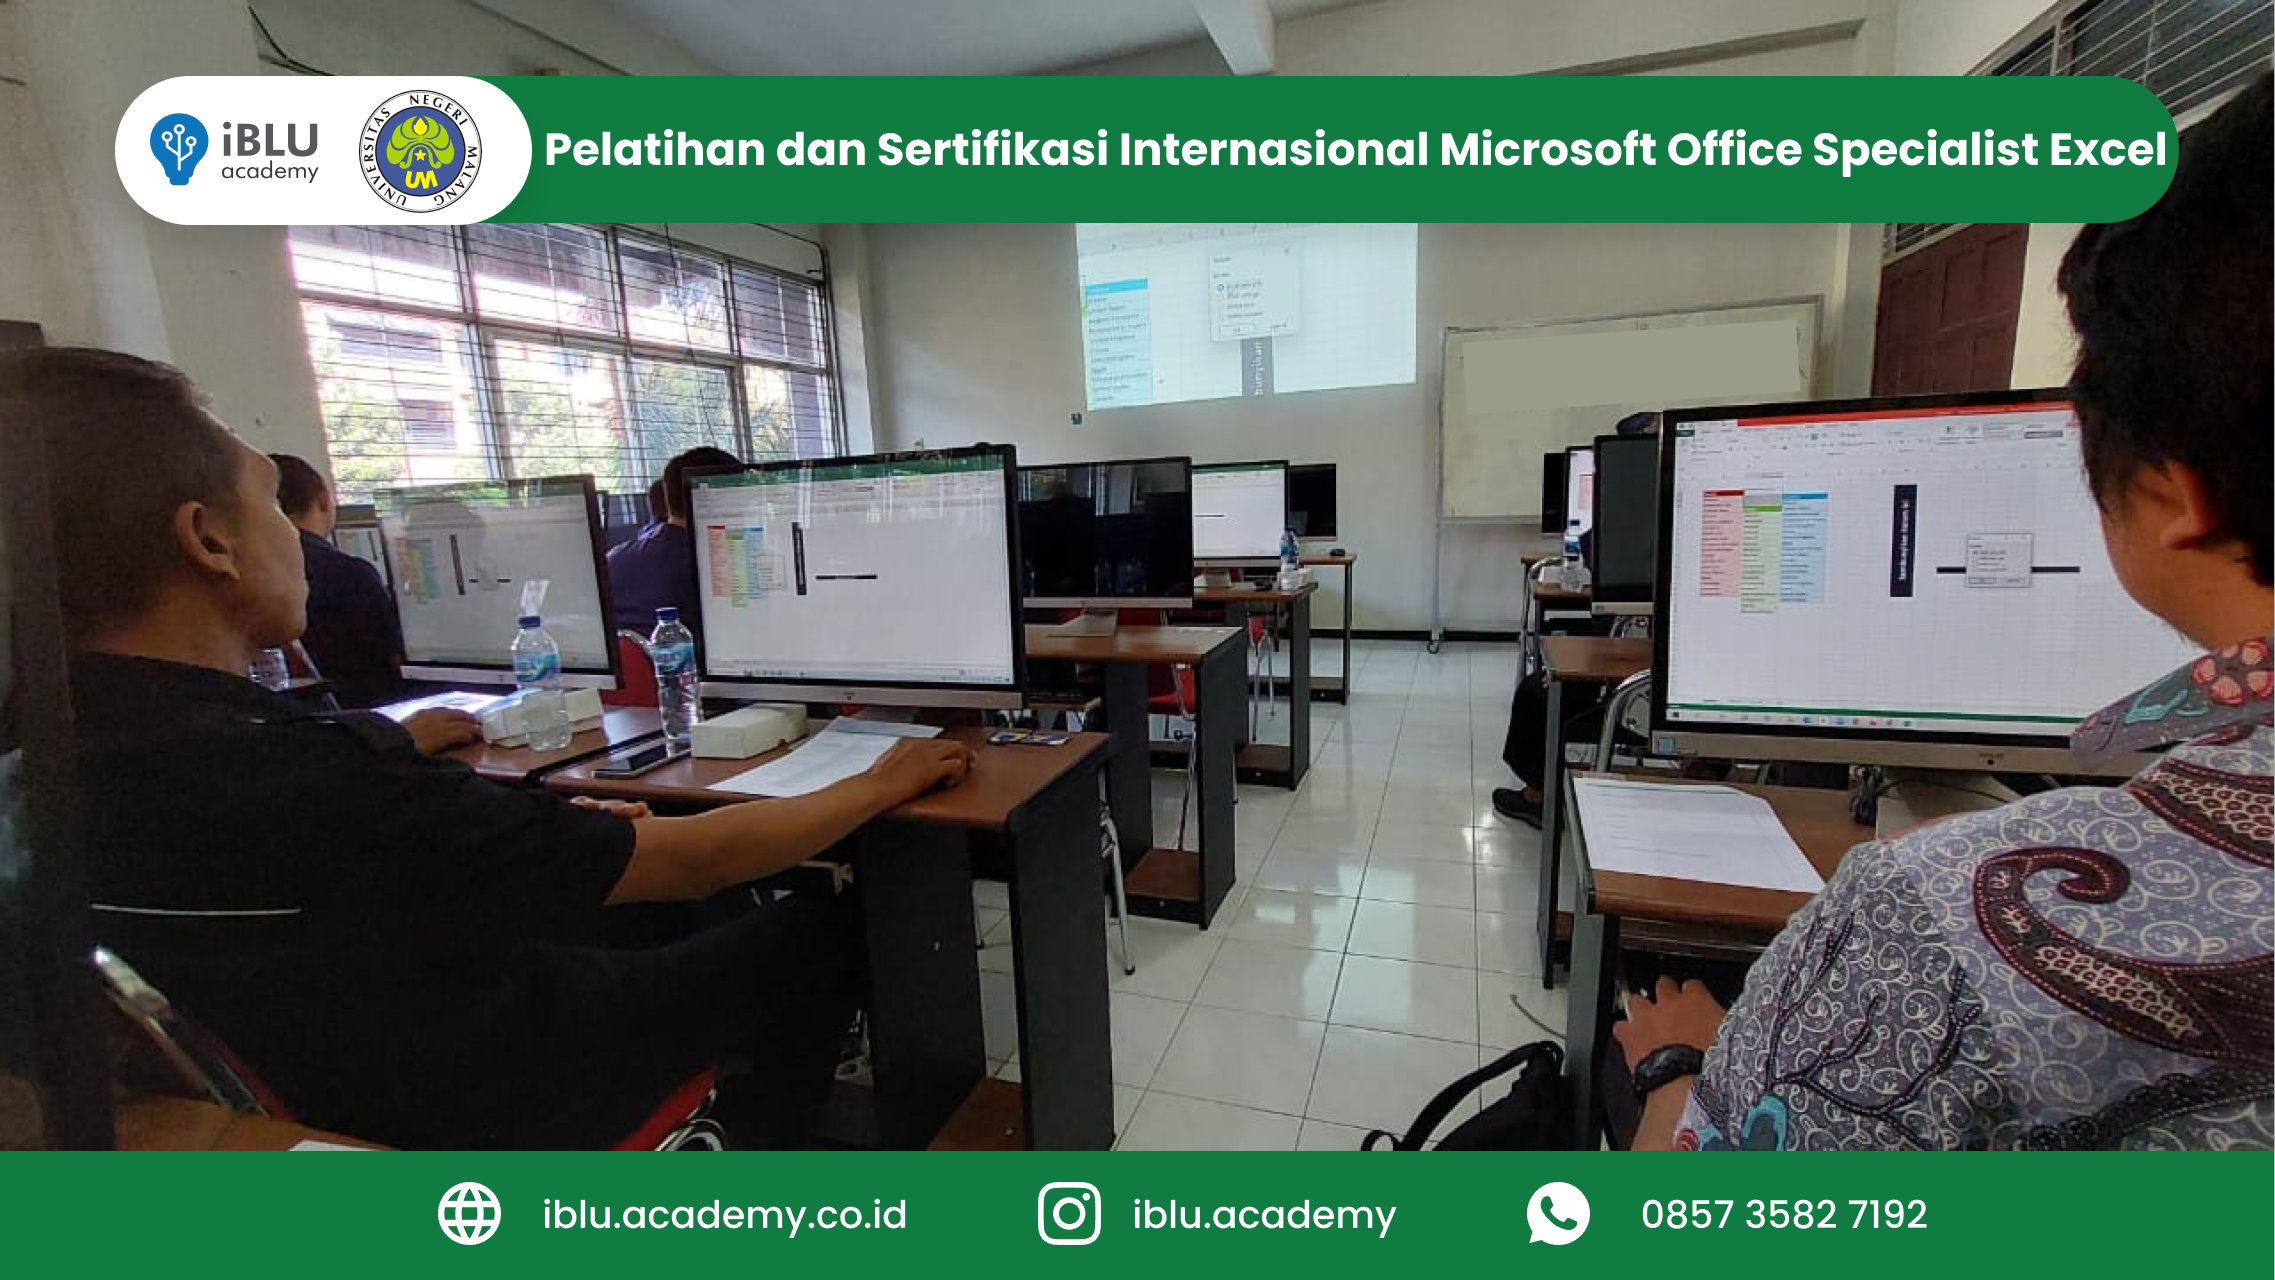 You are currently viewing Sertifikasi Internasional Microsoft Excel bersama iBLU Academy